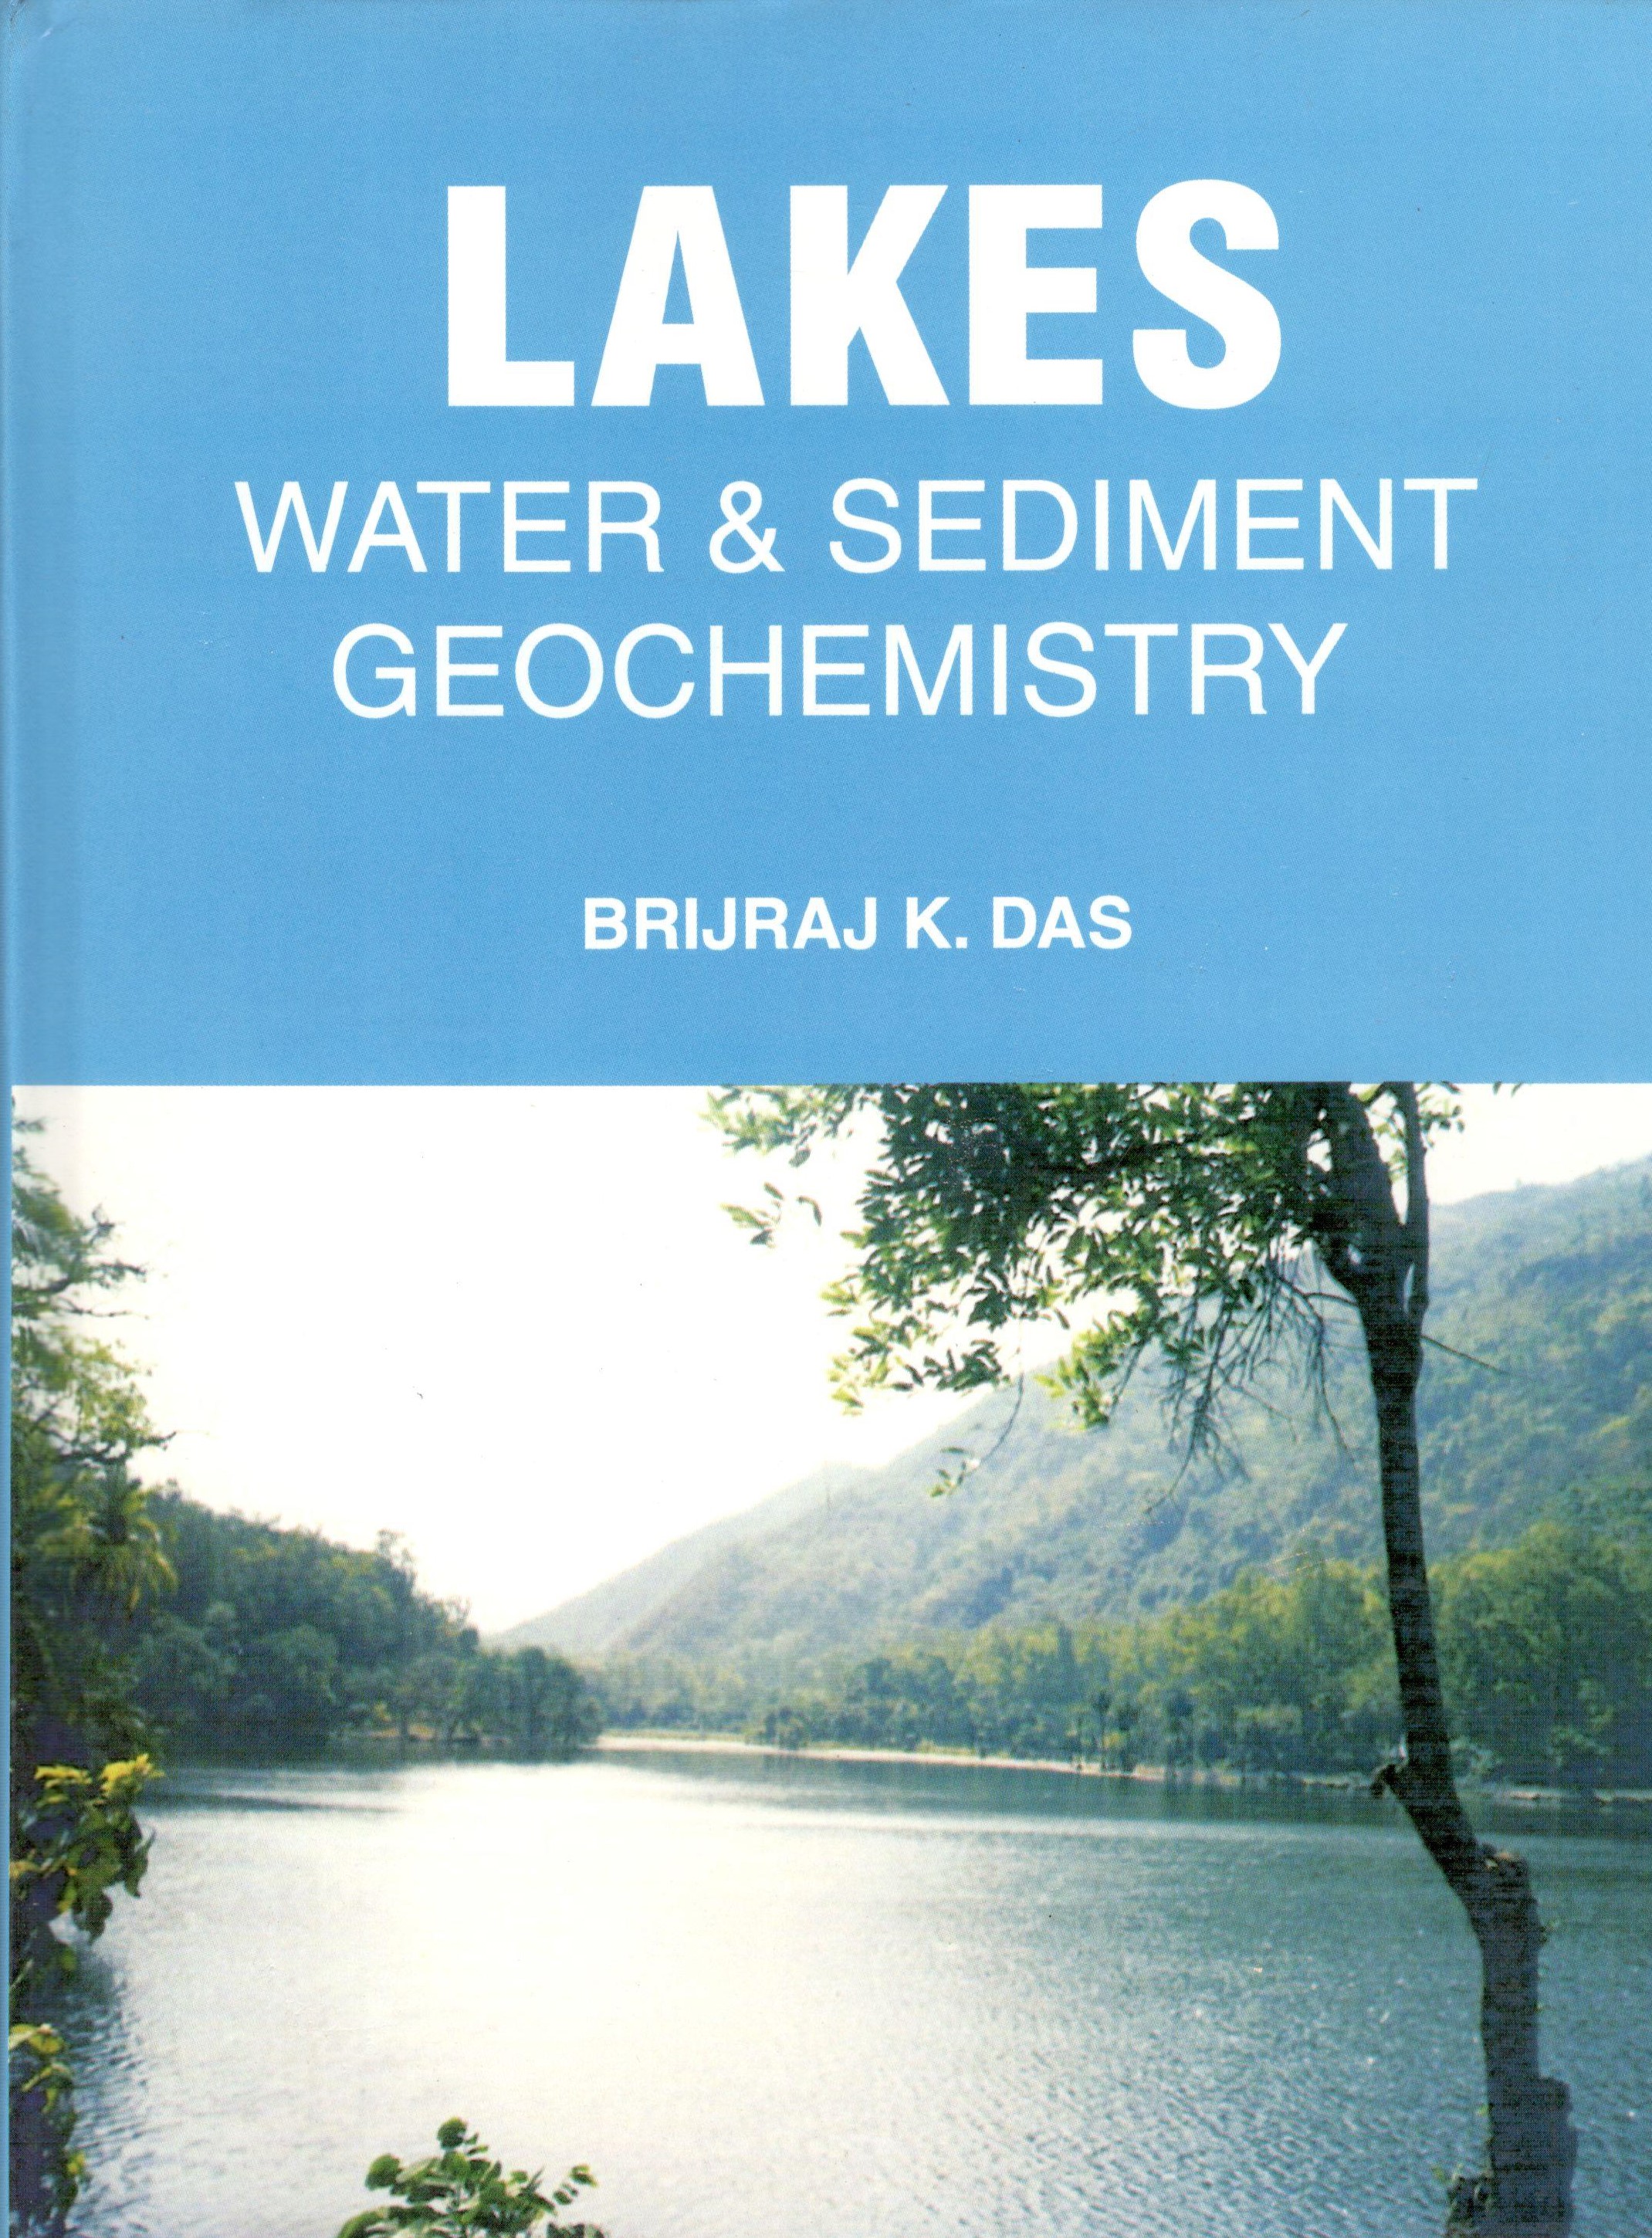 Lakes Water & Sediment Geochemistry